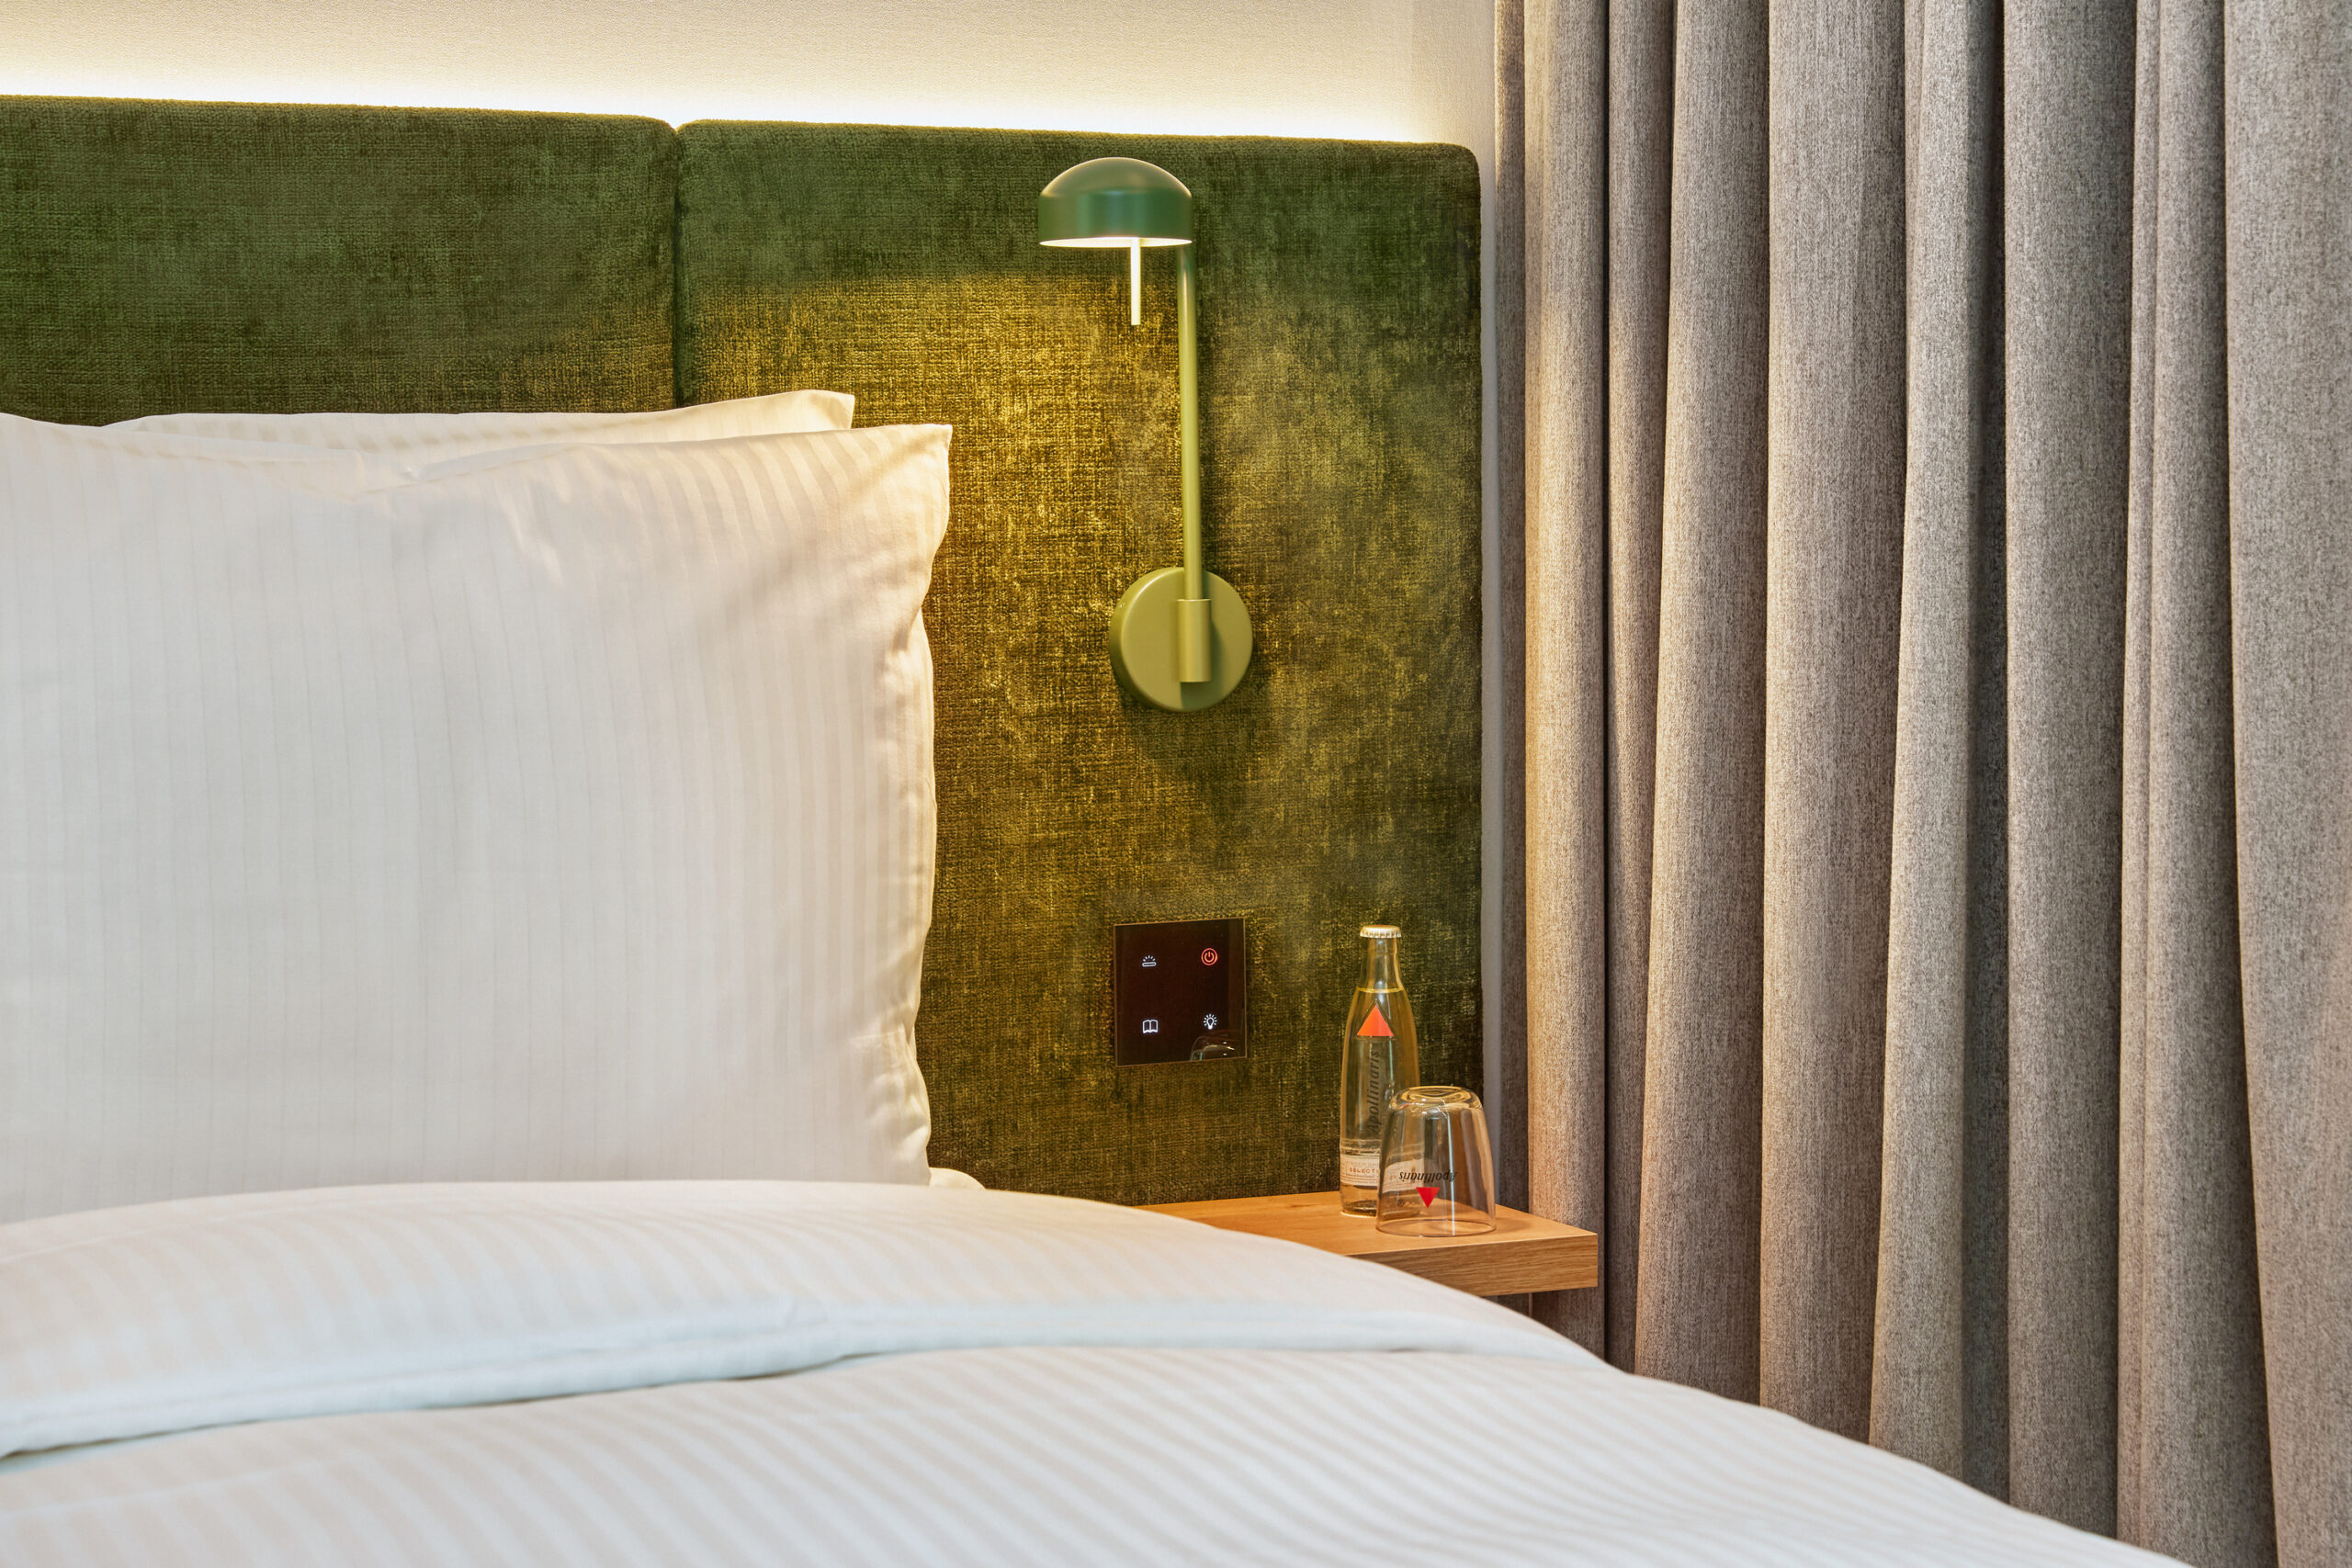 h-hotels_zimmer-komfort-doppelzimmer-04-hplus-hotel-frankfurt-eschborn_L-max.-3000px-_ac60913a_